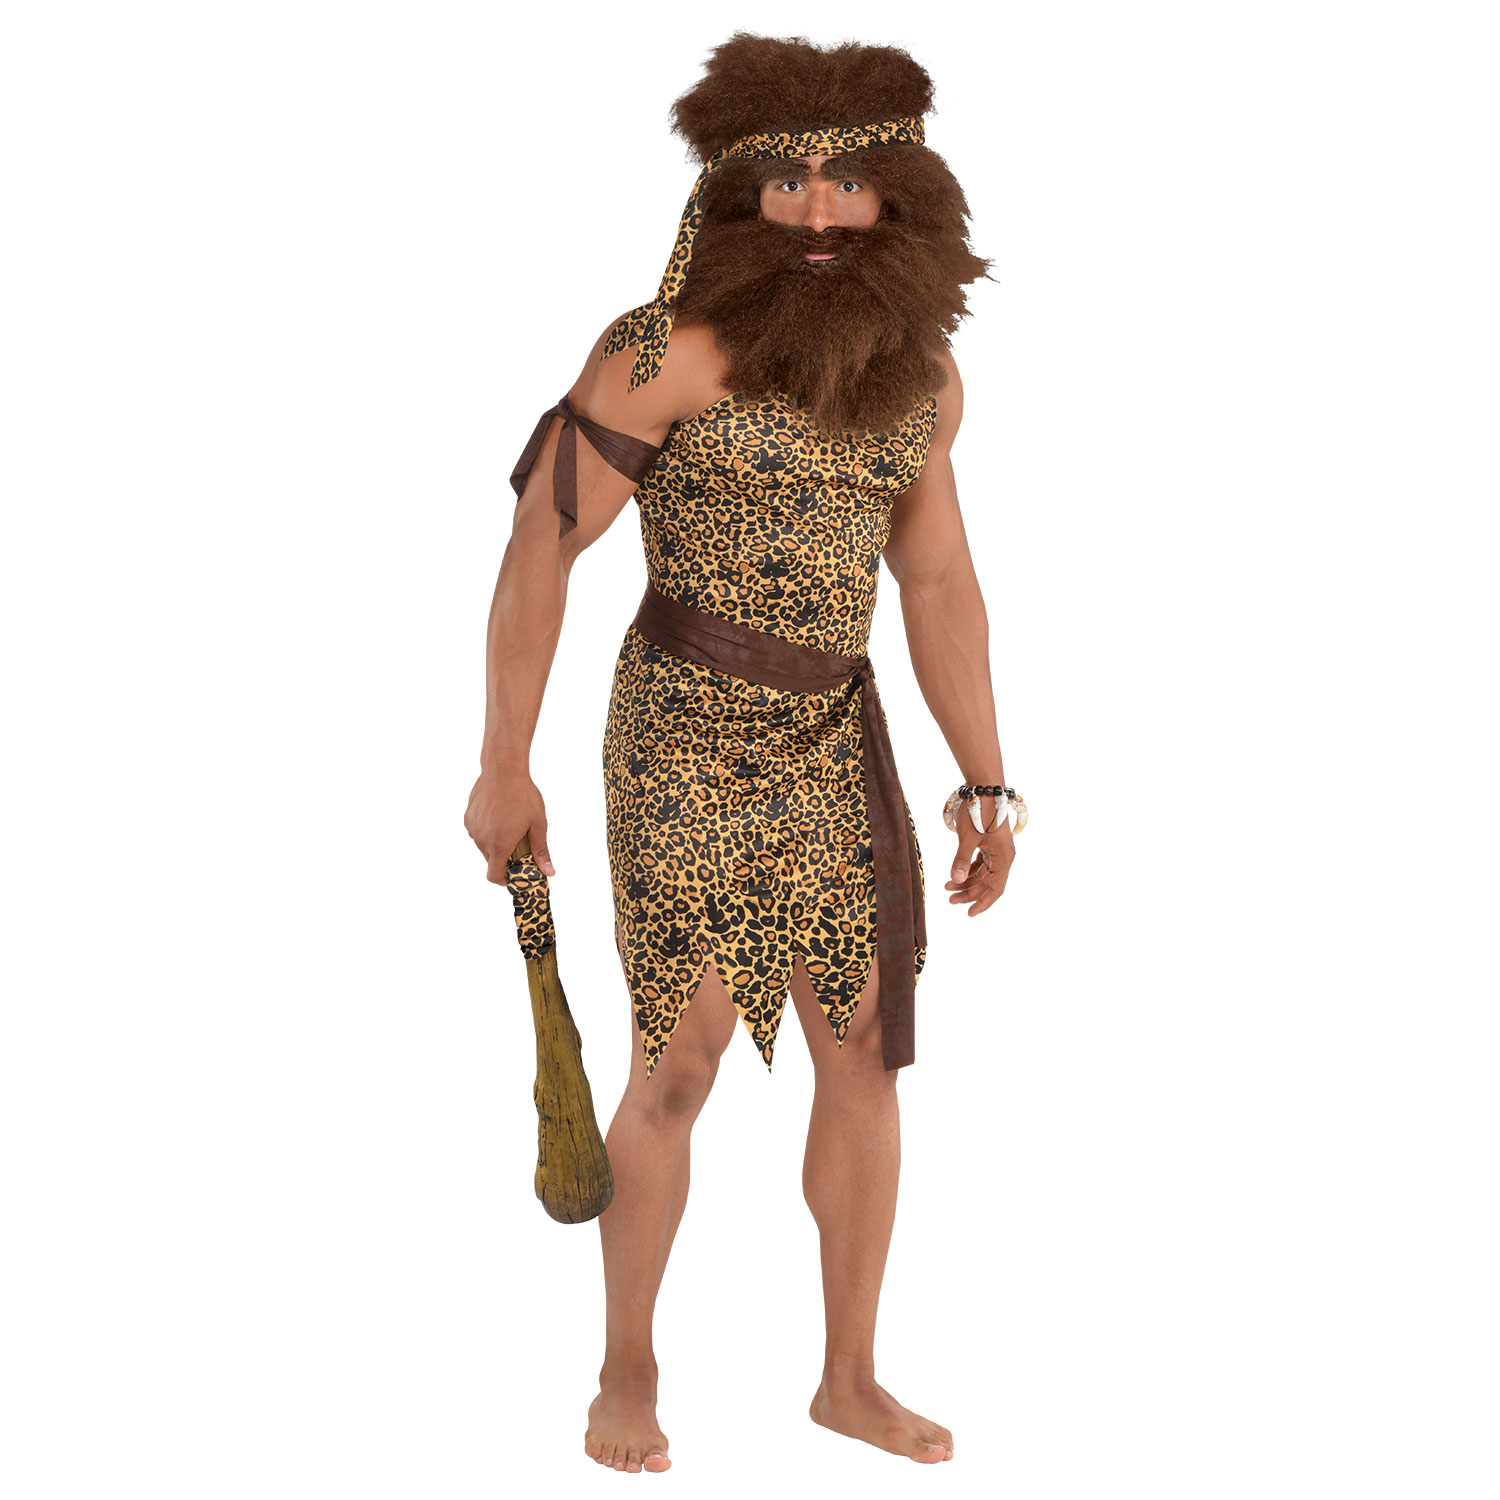 Caveman Costume - Standard Size- 1 PC : Amscan International